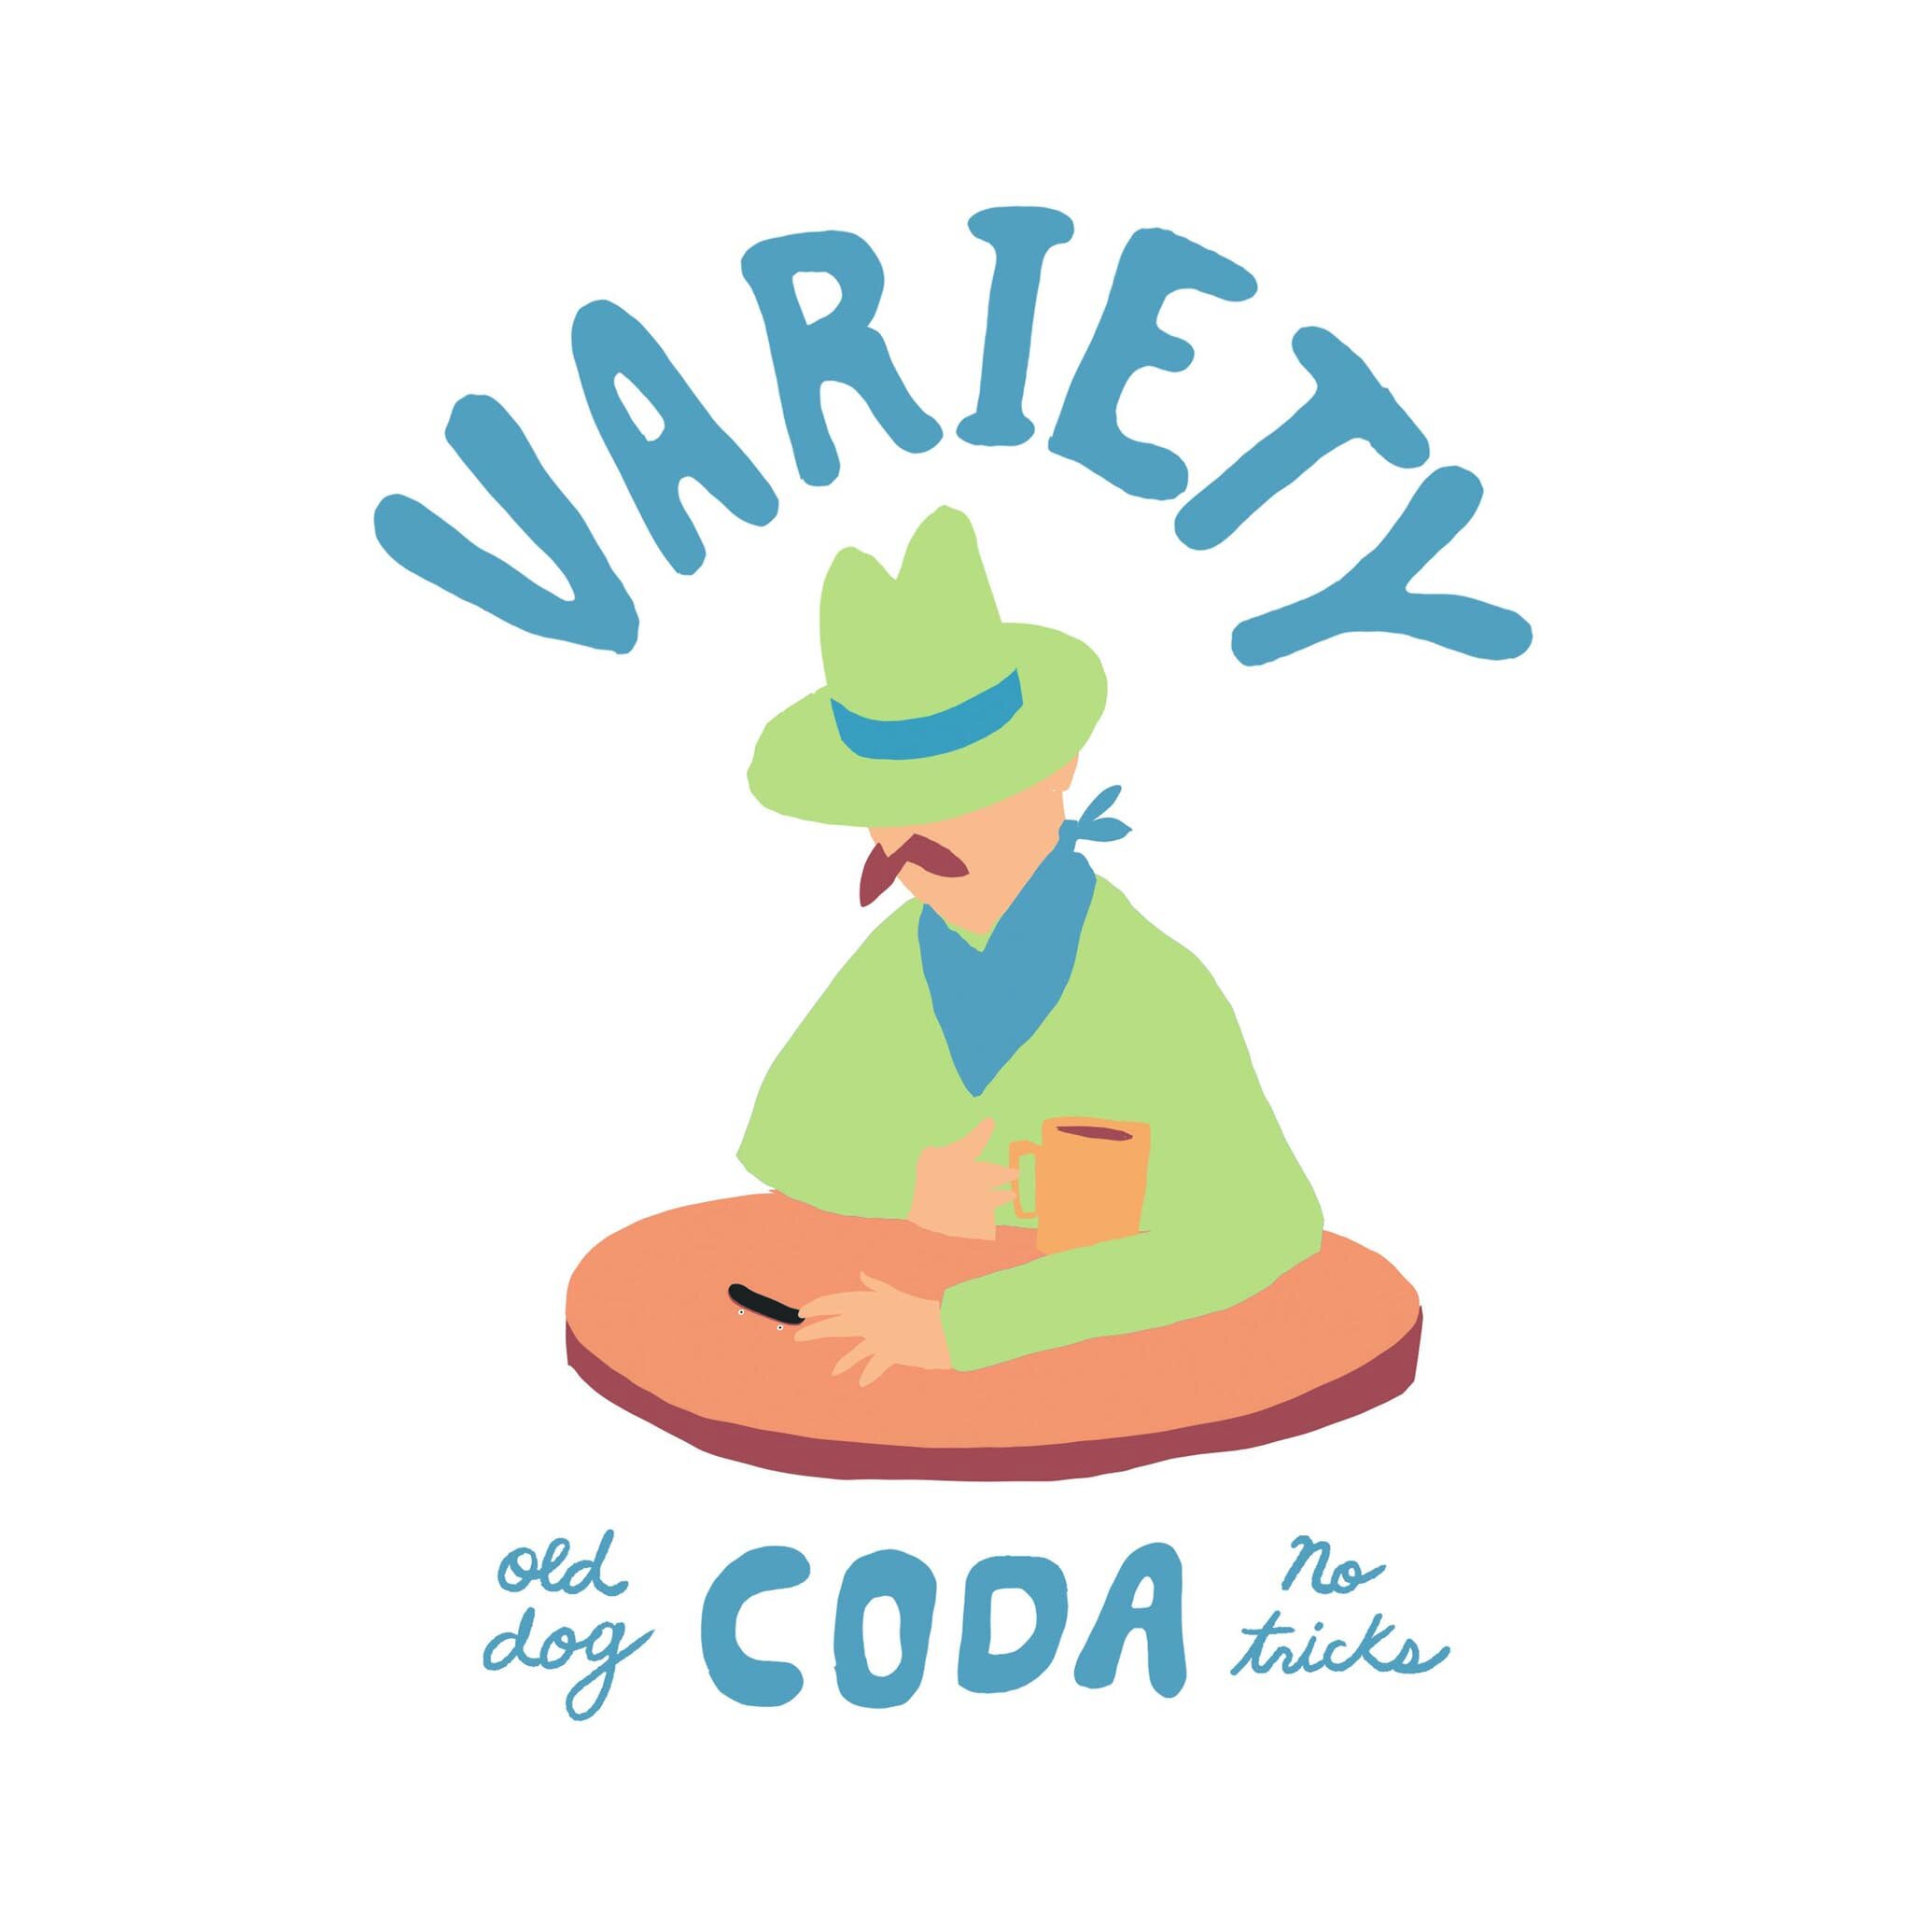 Coda_Variety_color copy.jpg